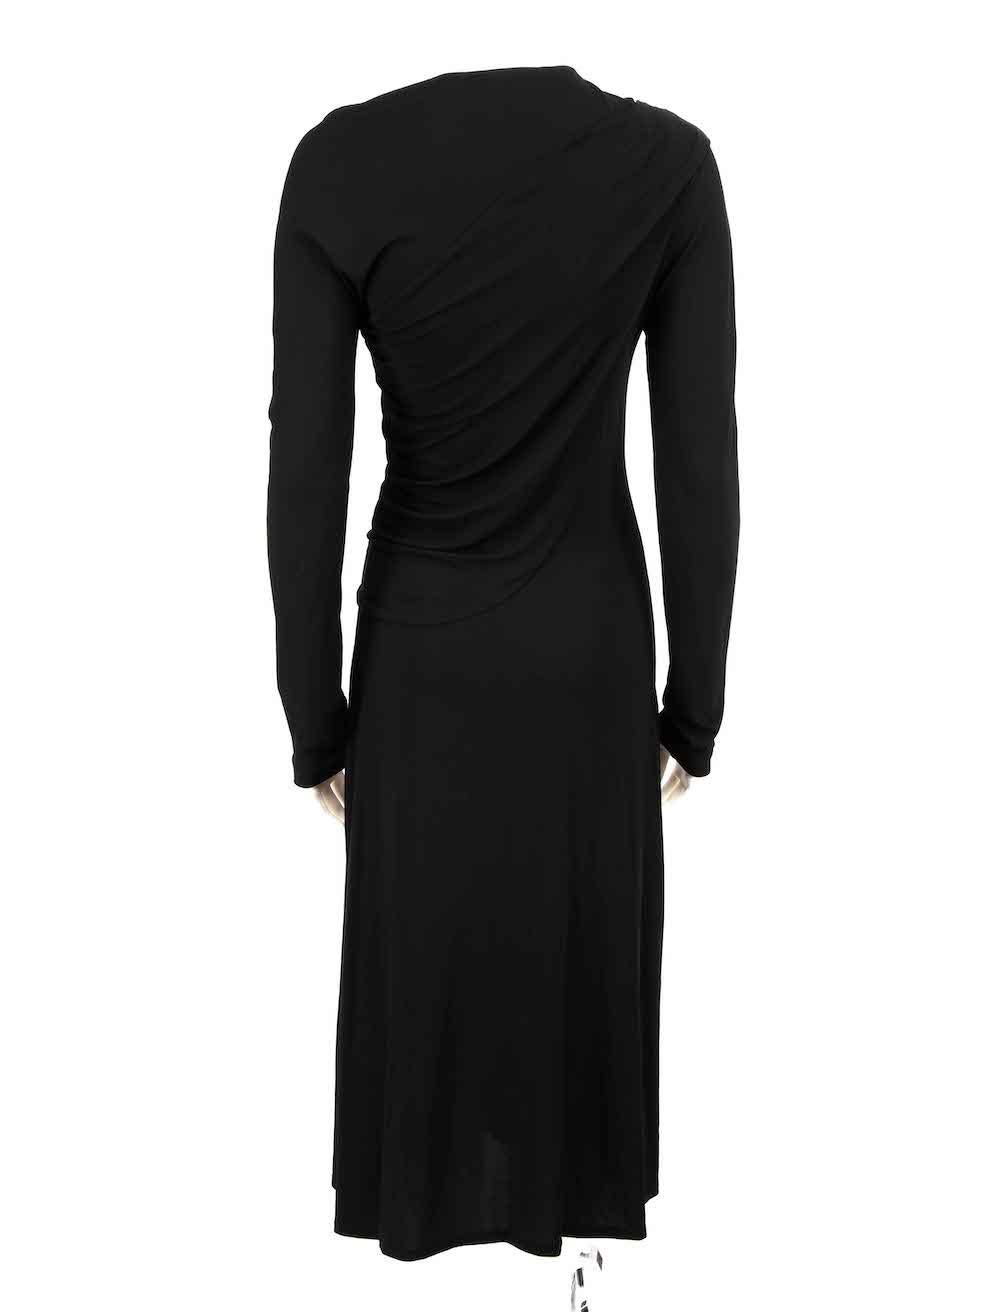 Jil Sander Black Drape Accent Midi Dress Size L In Good Condition For Sale In London, GB